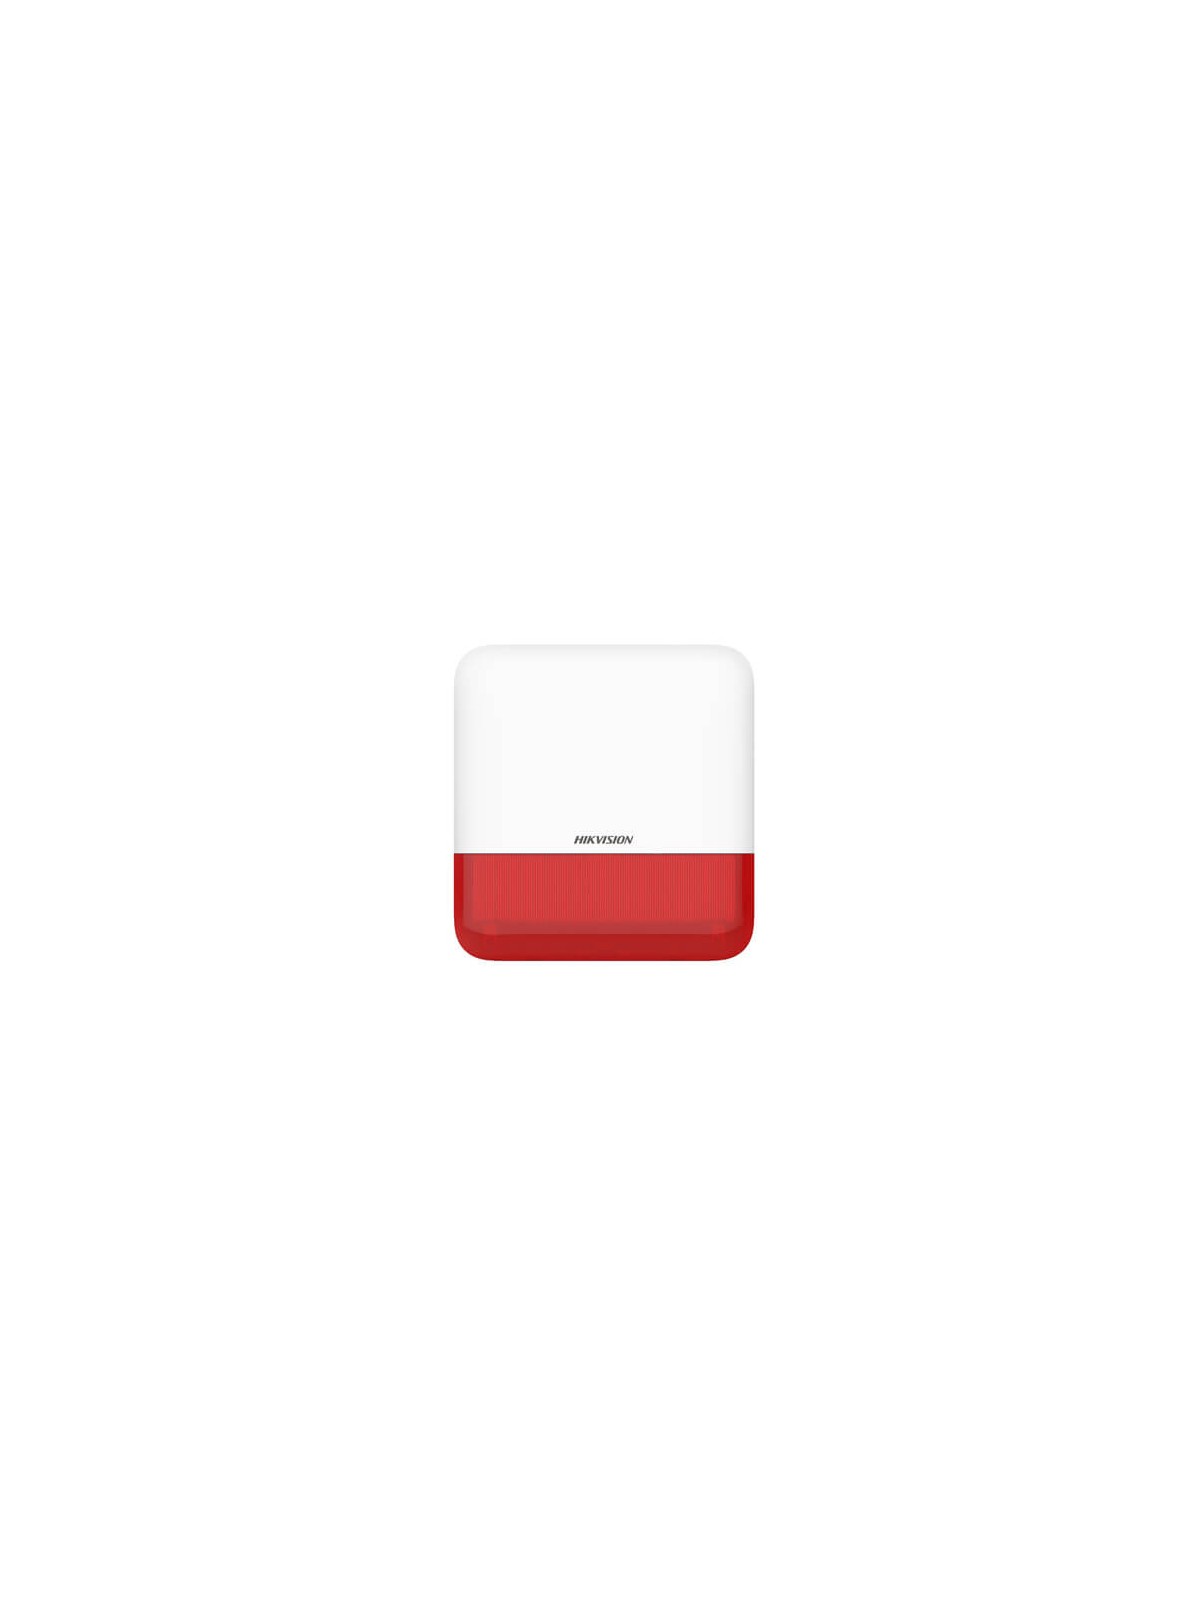 Sirena Hikvision AXPRO DS-PS1-E-WE para exterior (110db) con luz roja